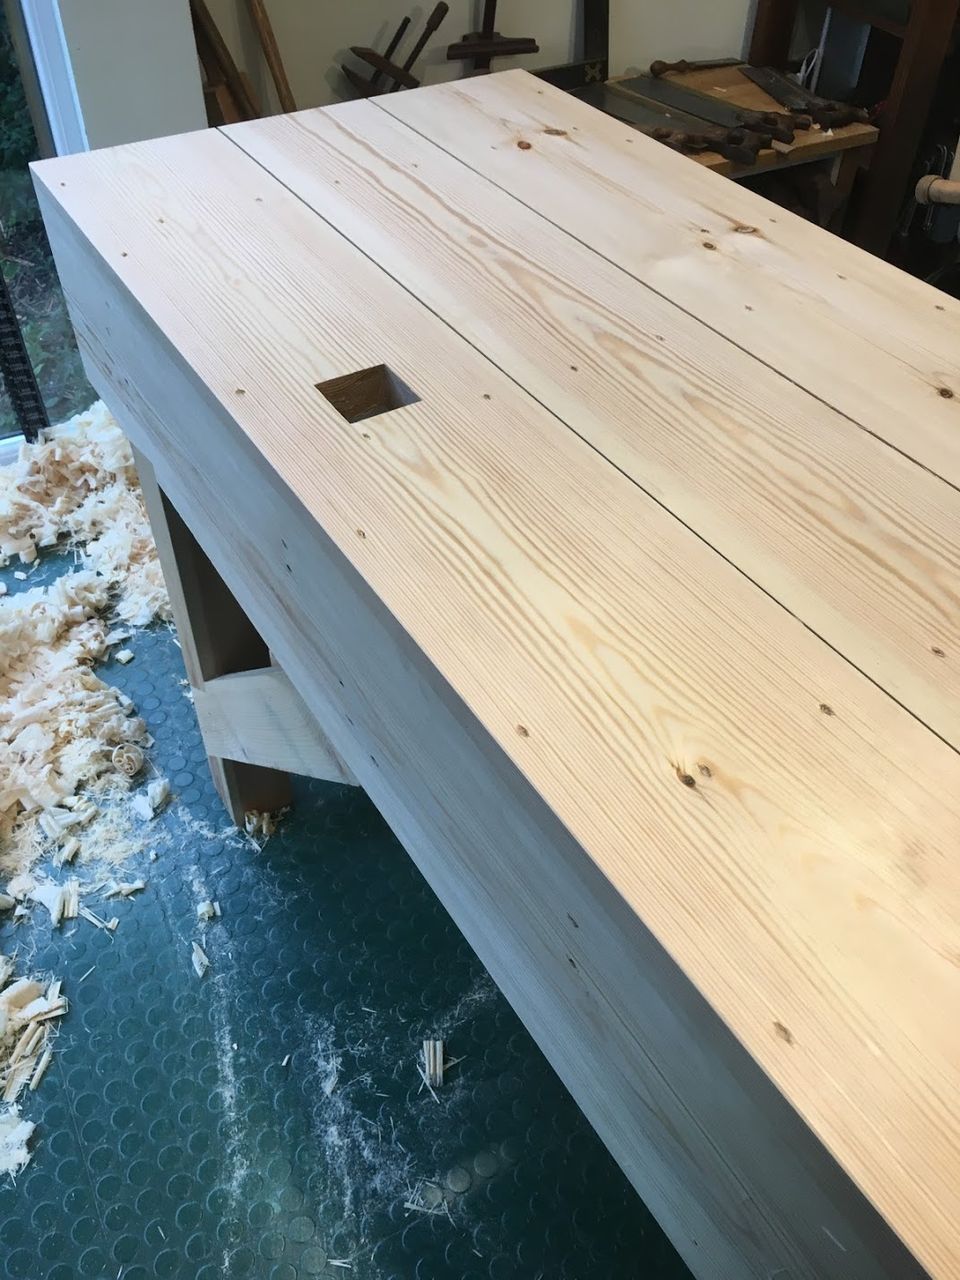 English Workbench - flattening and finishing the top